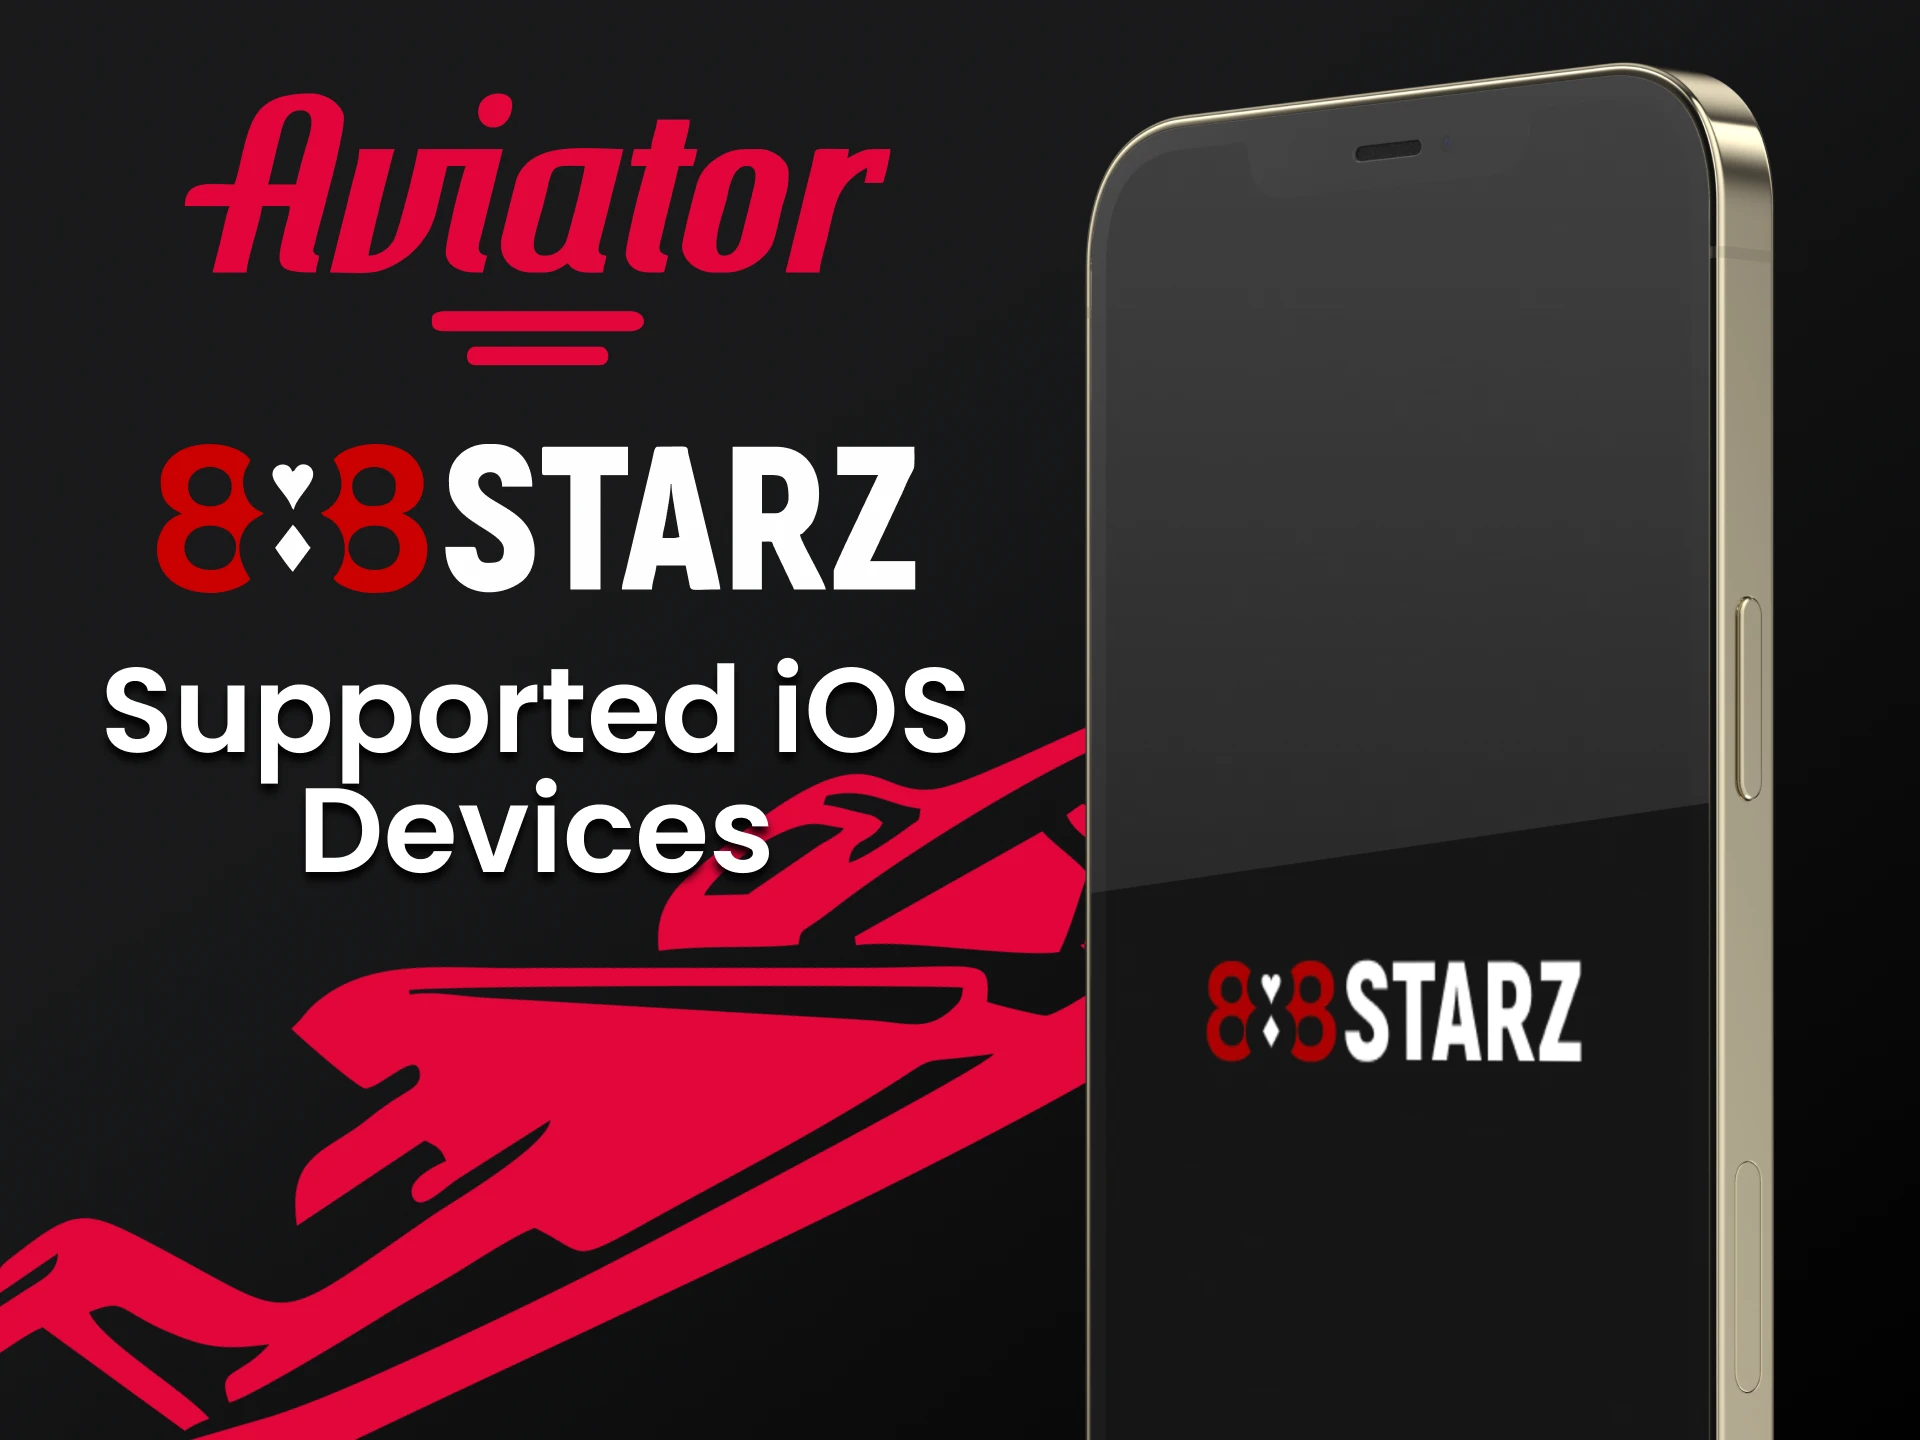 Play Aviator through the 888starz app on your iOS device.